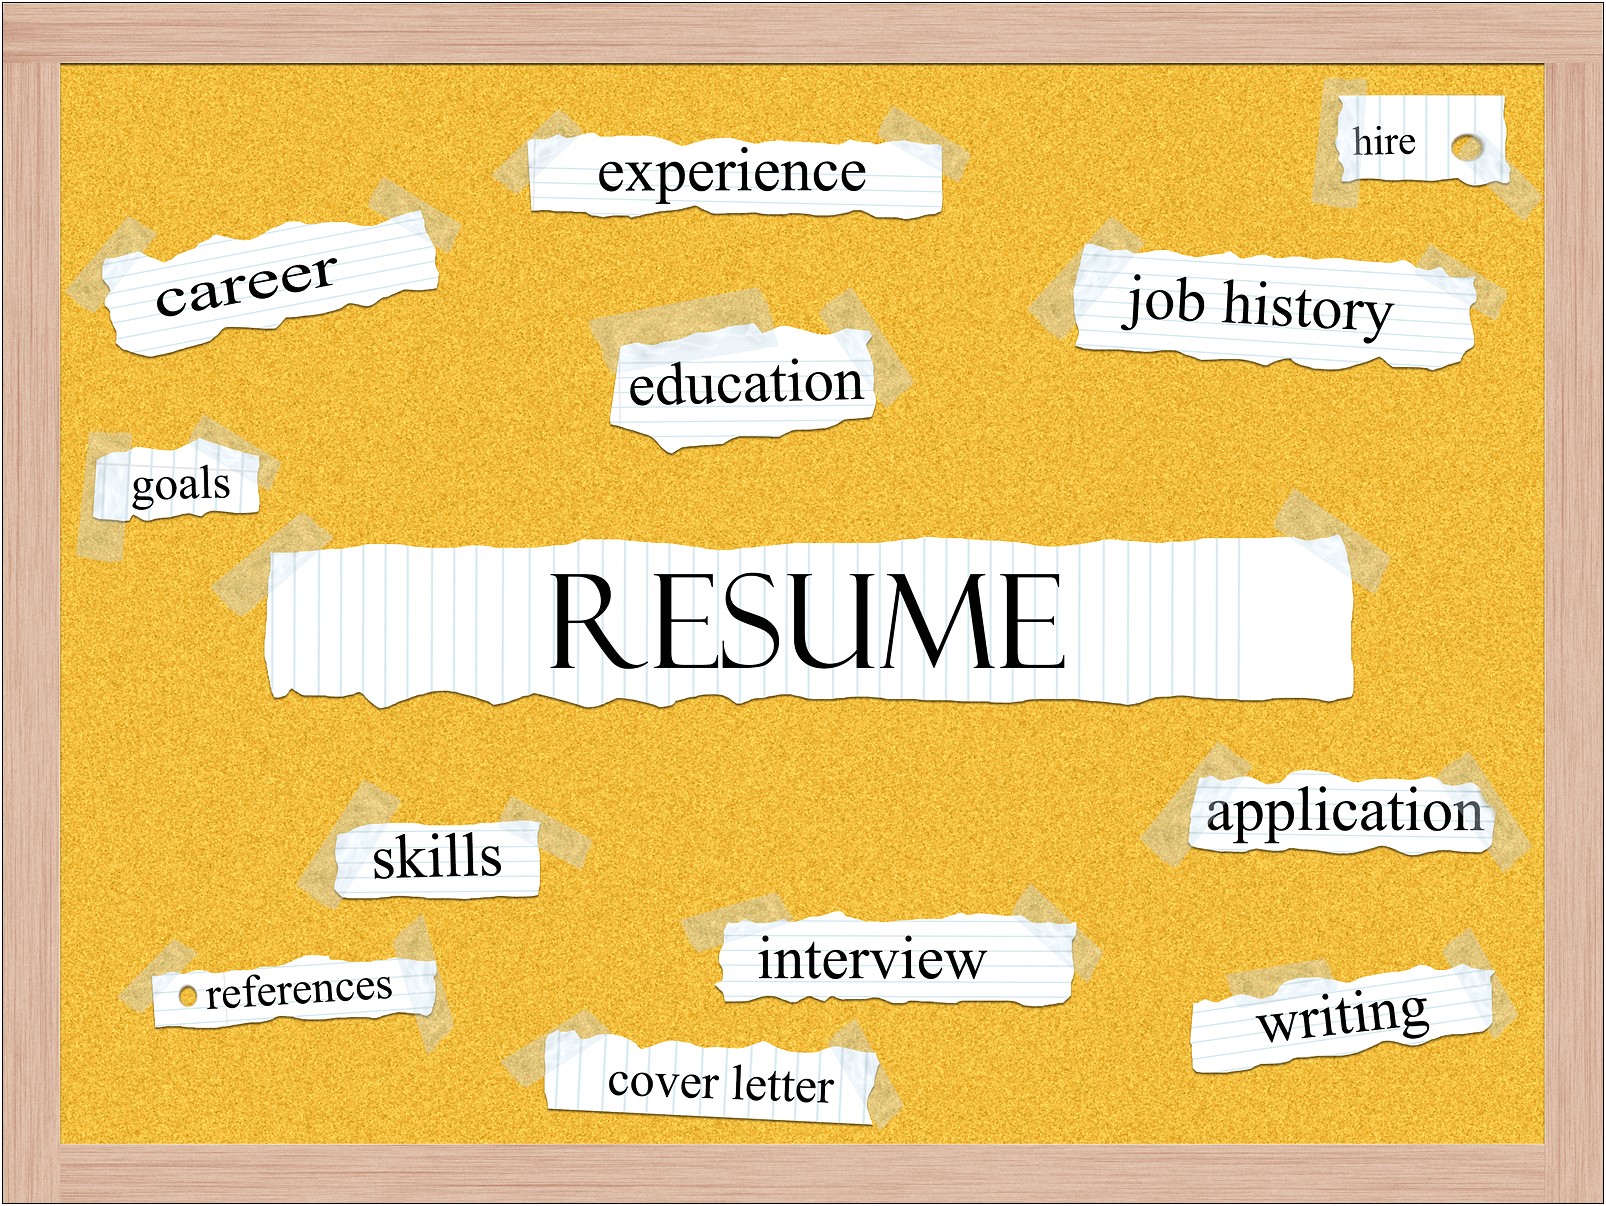 Resume Job Description Past Or Present Tense